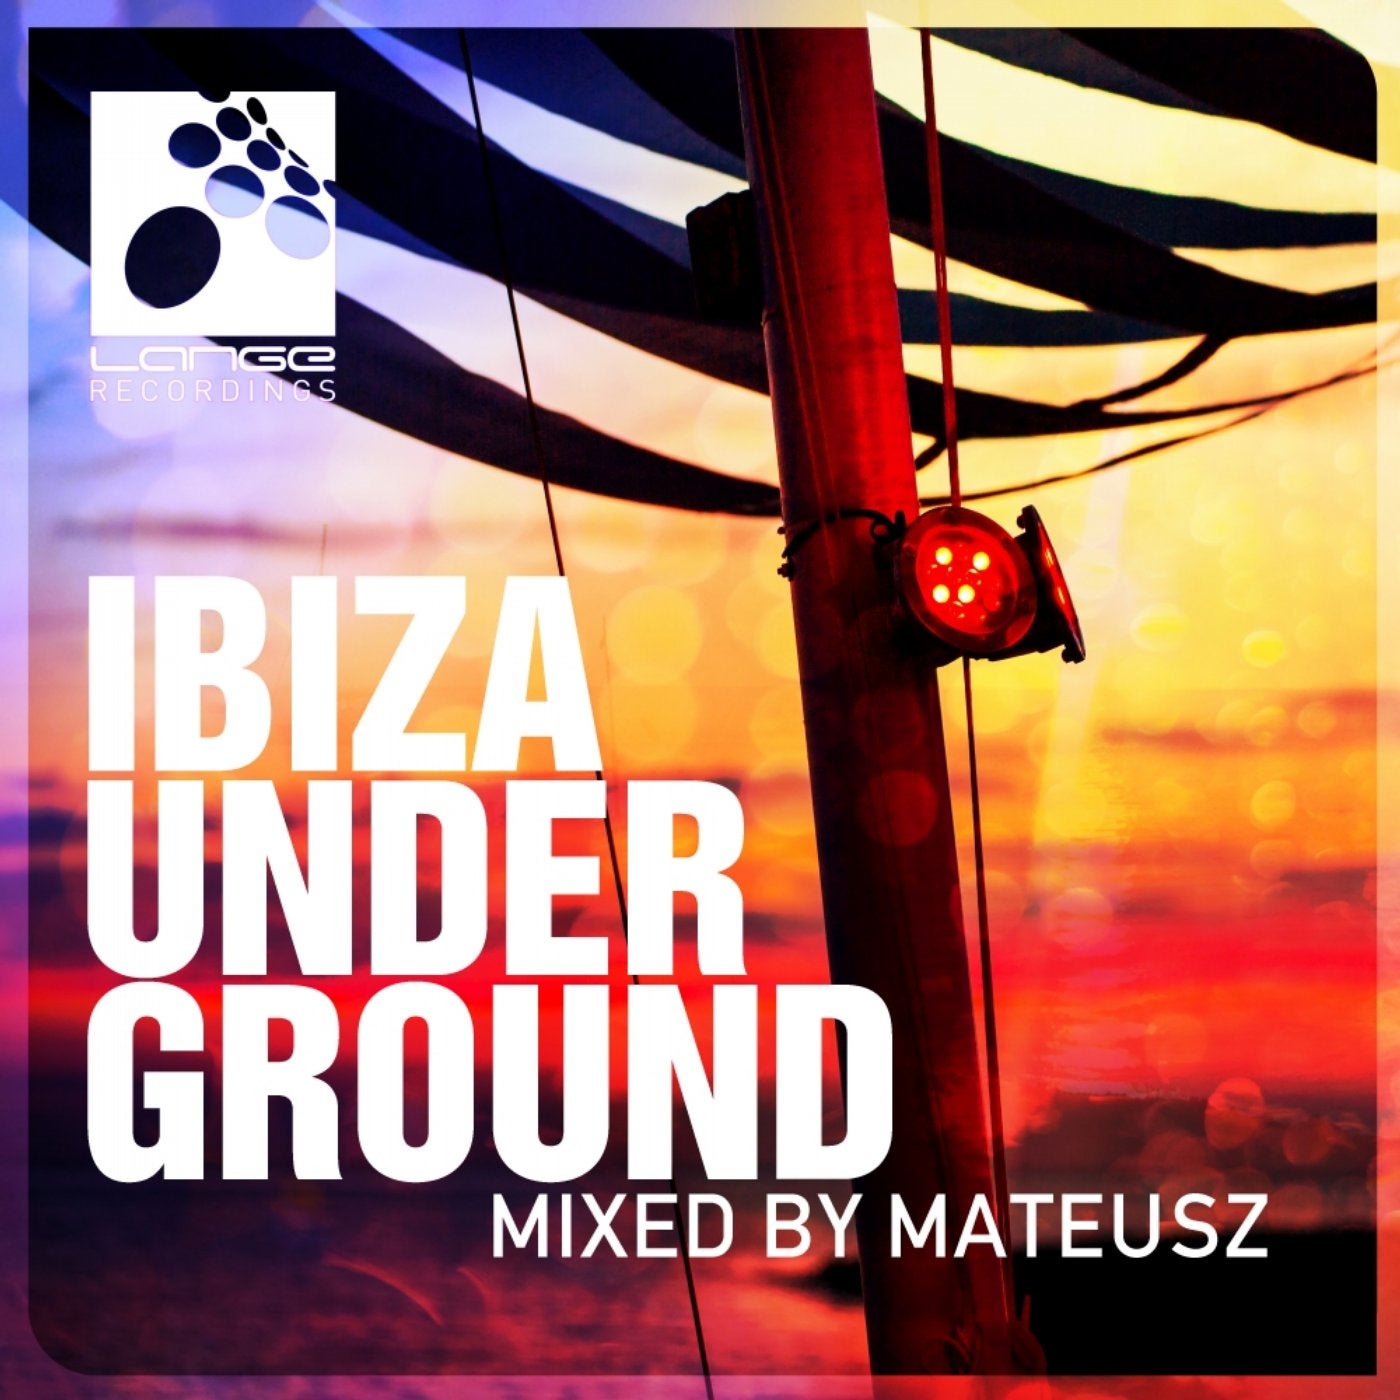 Ibiza Underground, Mixed by Mateusz